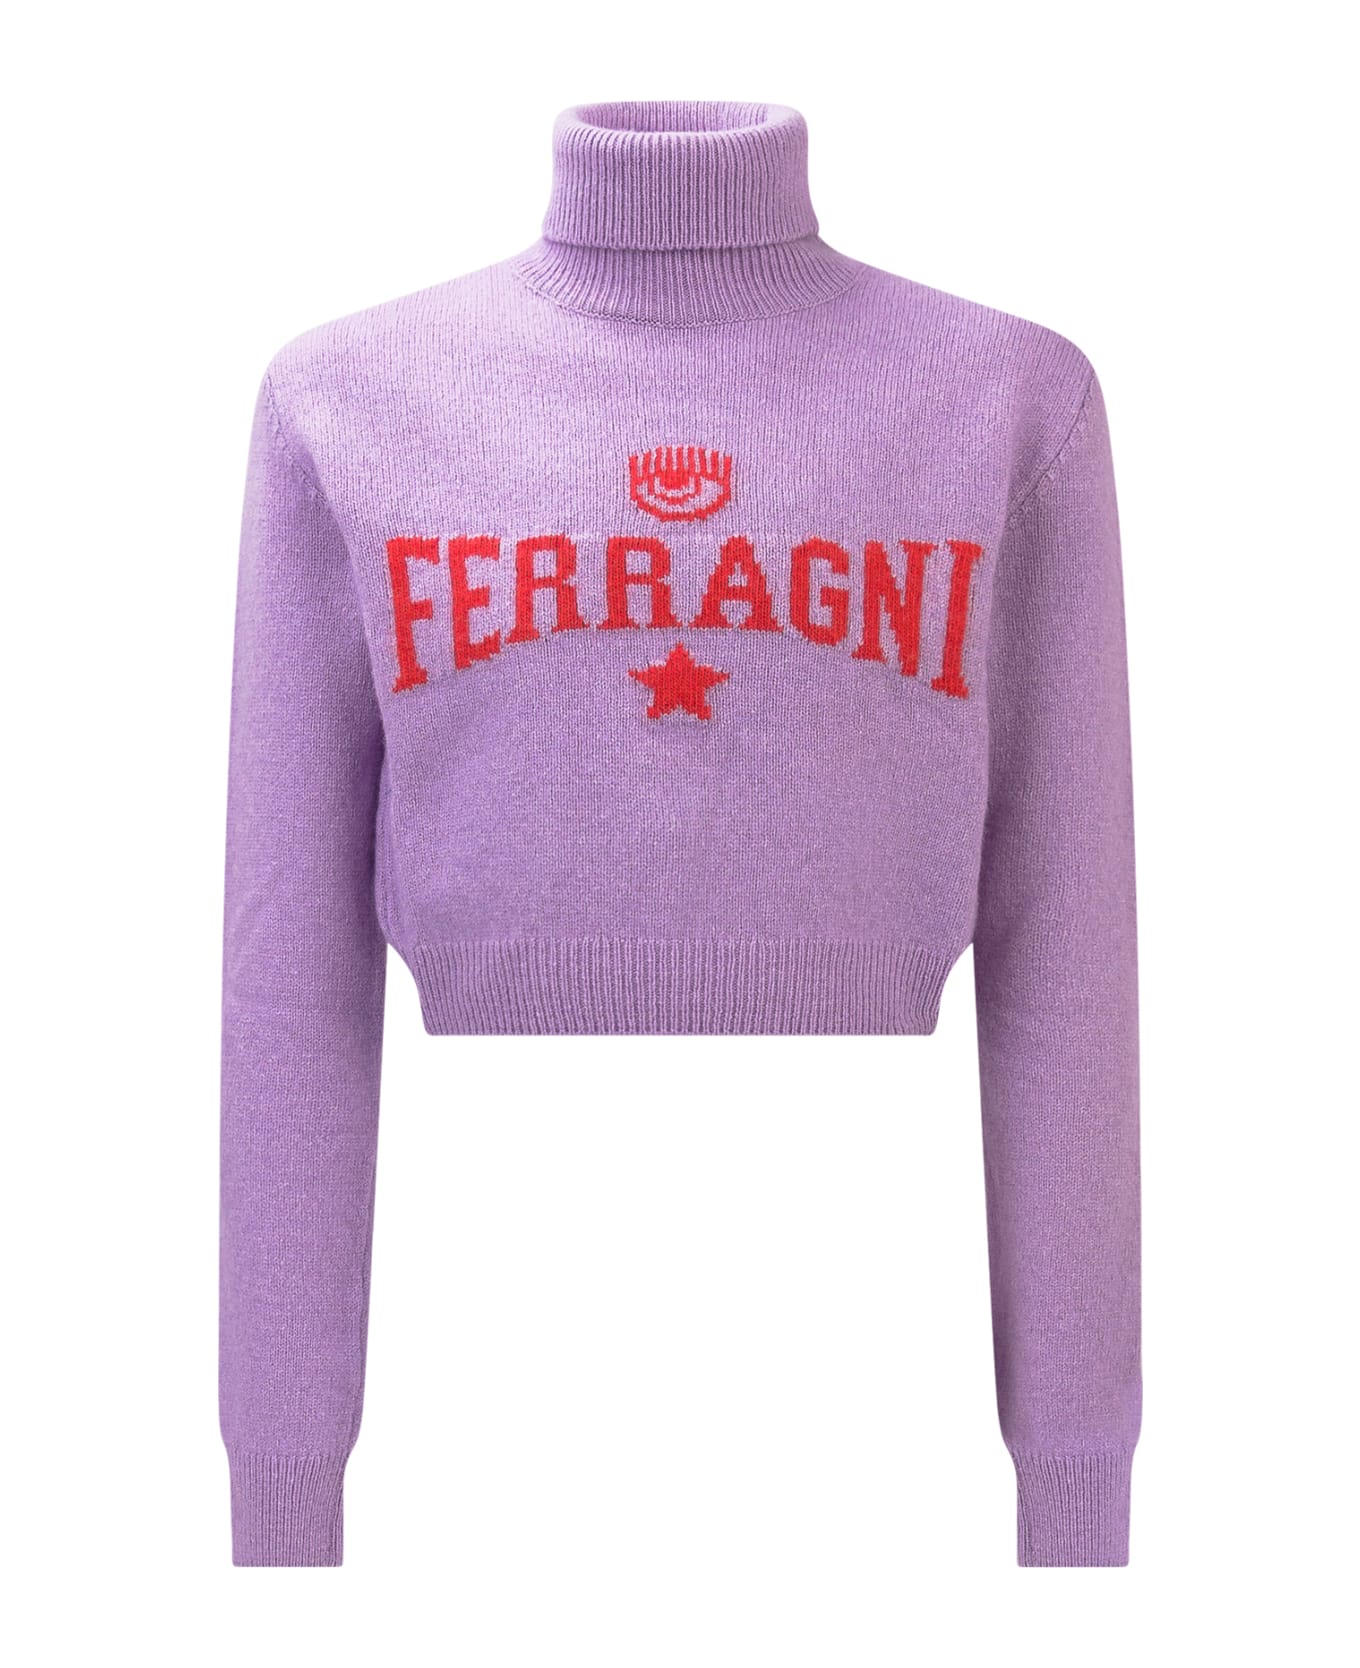 Chiara Ferragni Eye Star Sweater - PURPLE ROSE